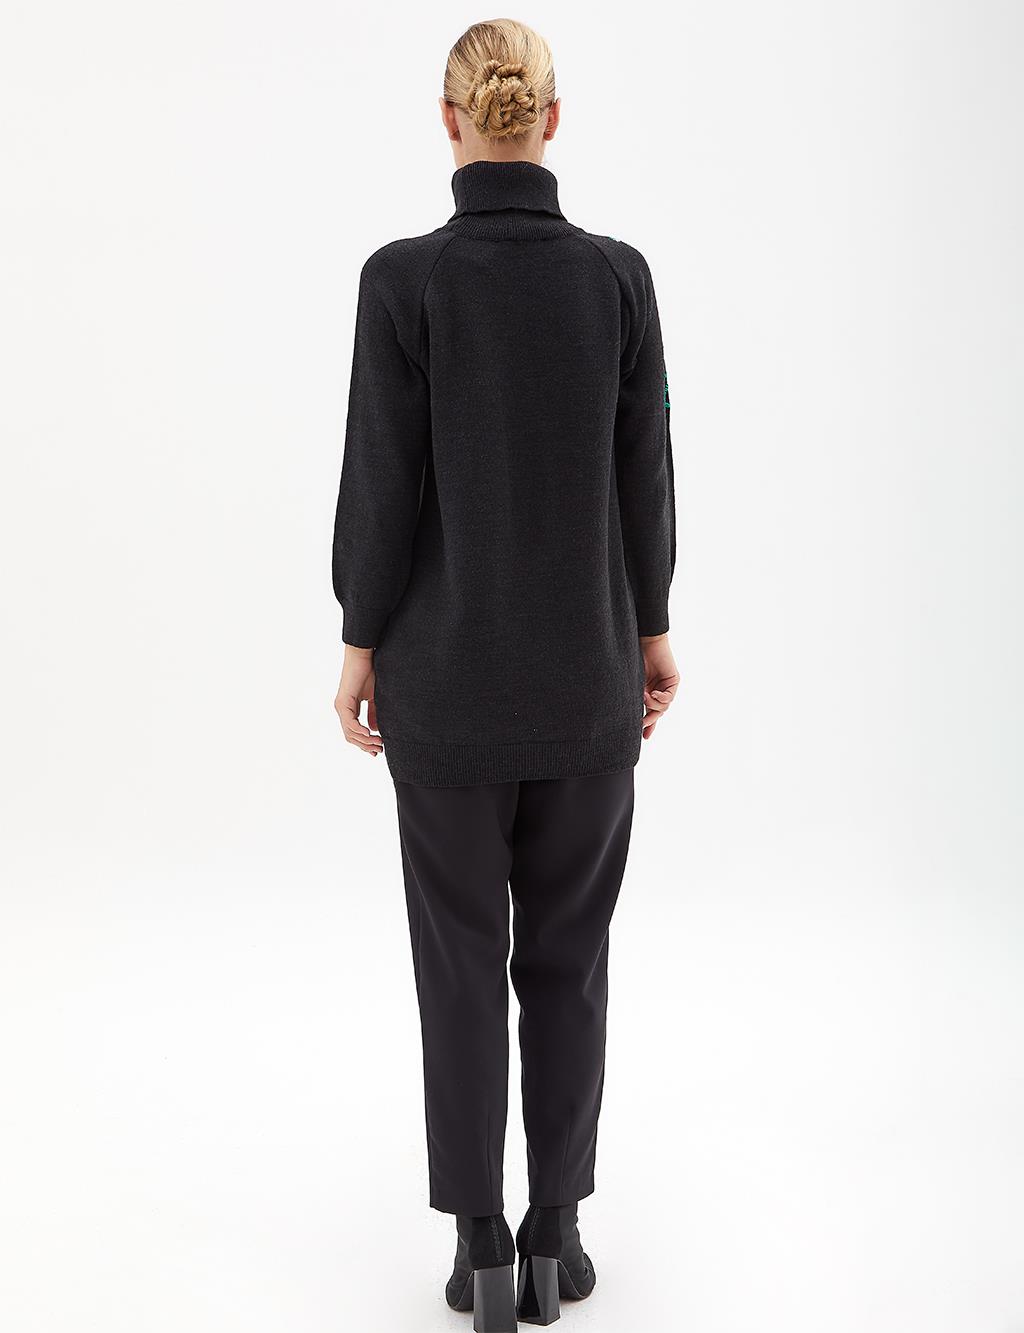 Embroidered Shoulder Knit Tunic Black